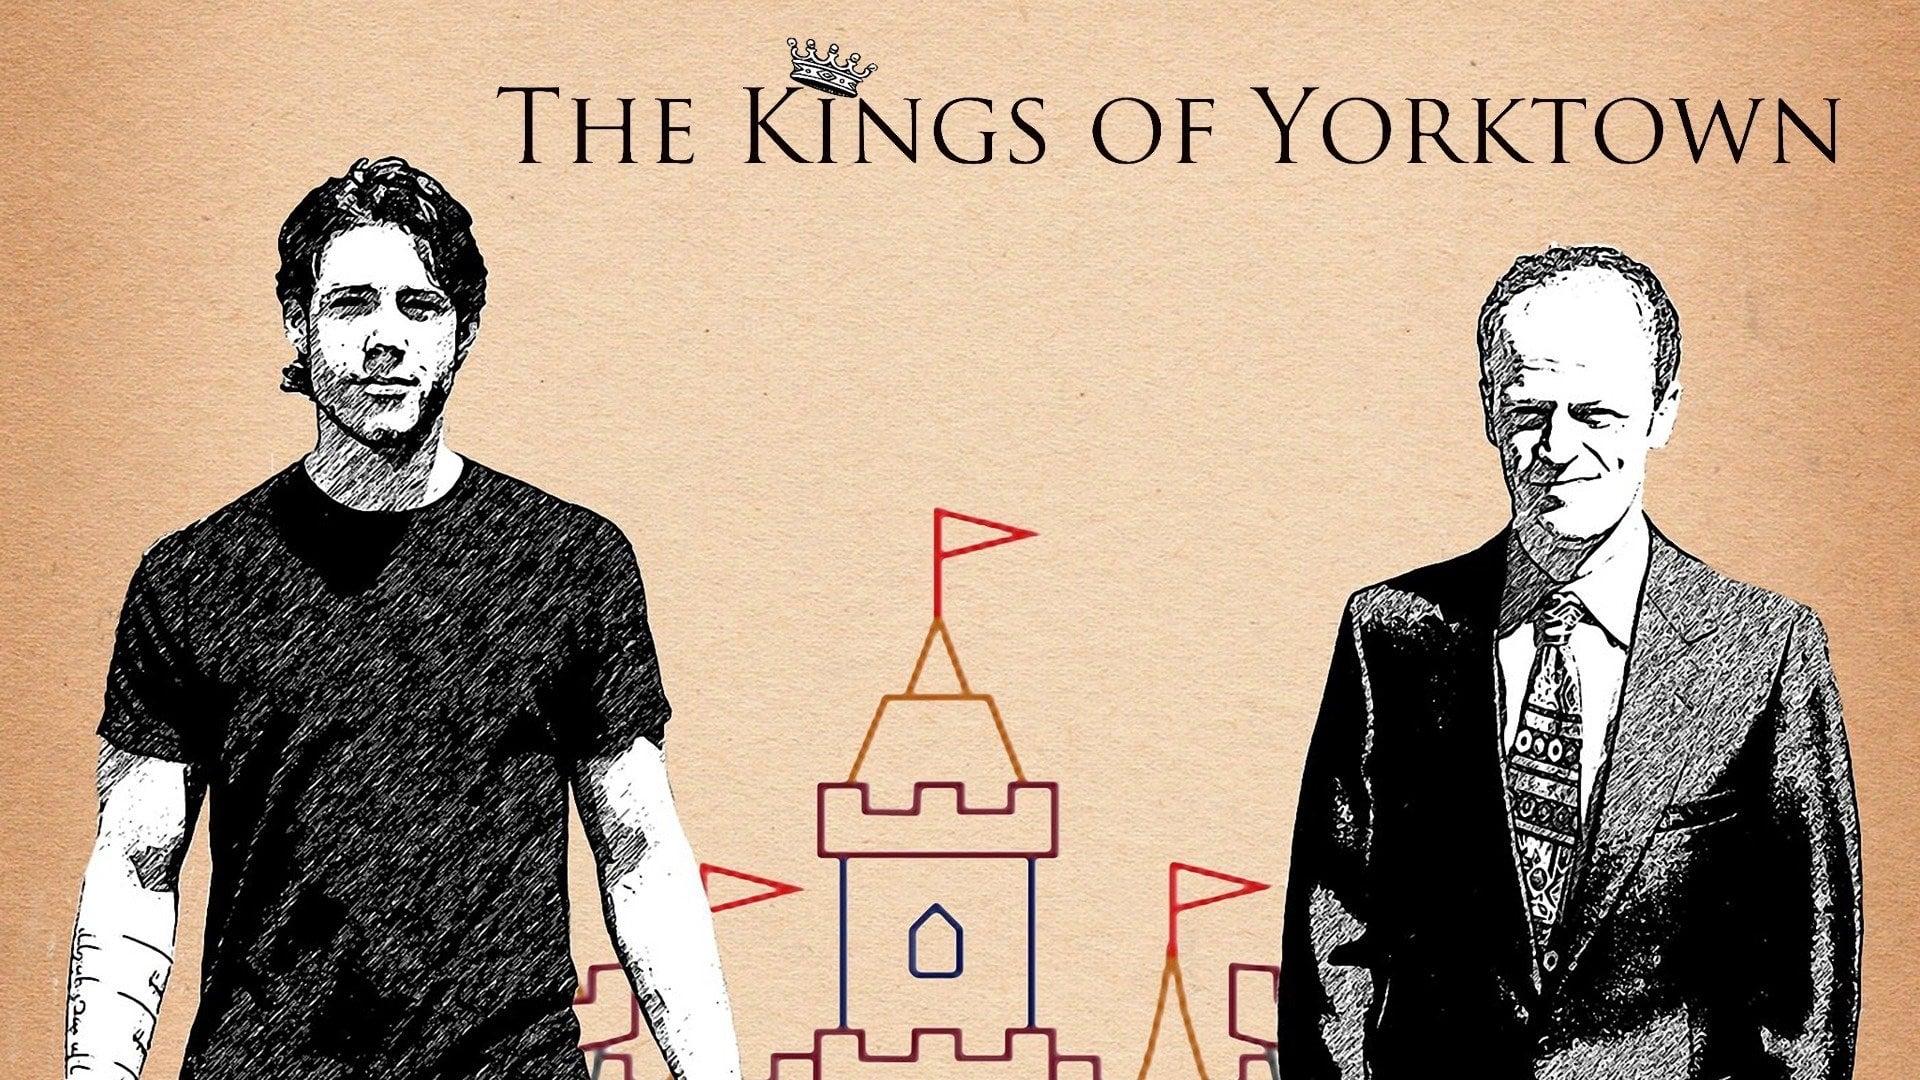 The Kings of Yorktown backdrop